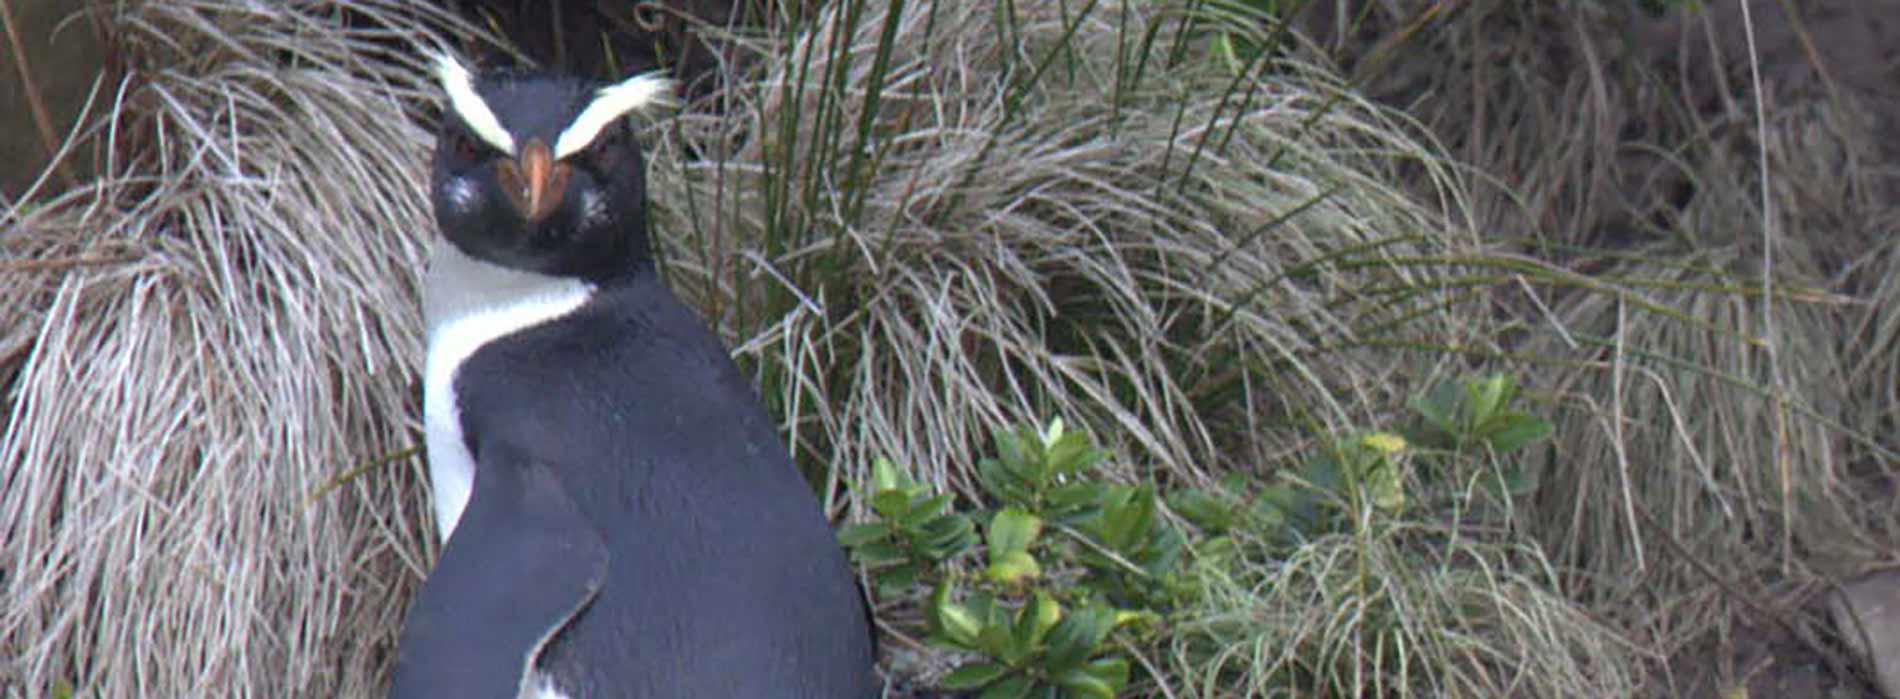 Fiordland crested penguin